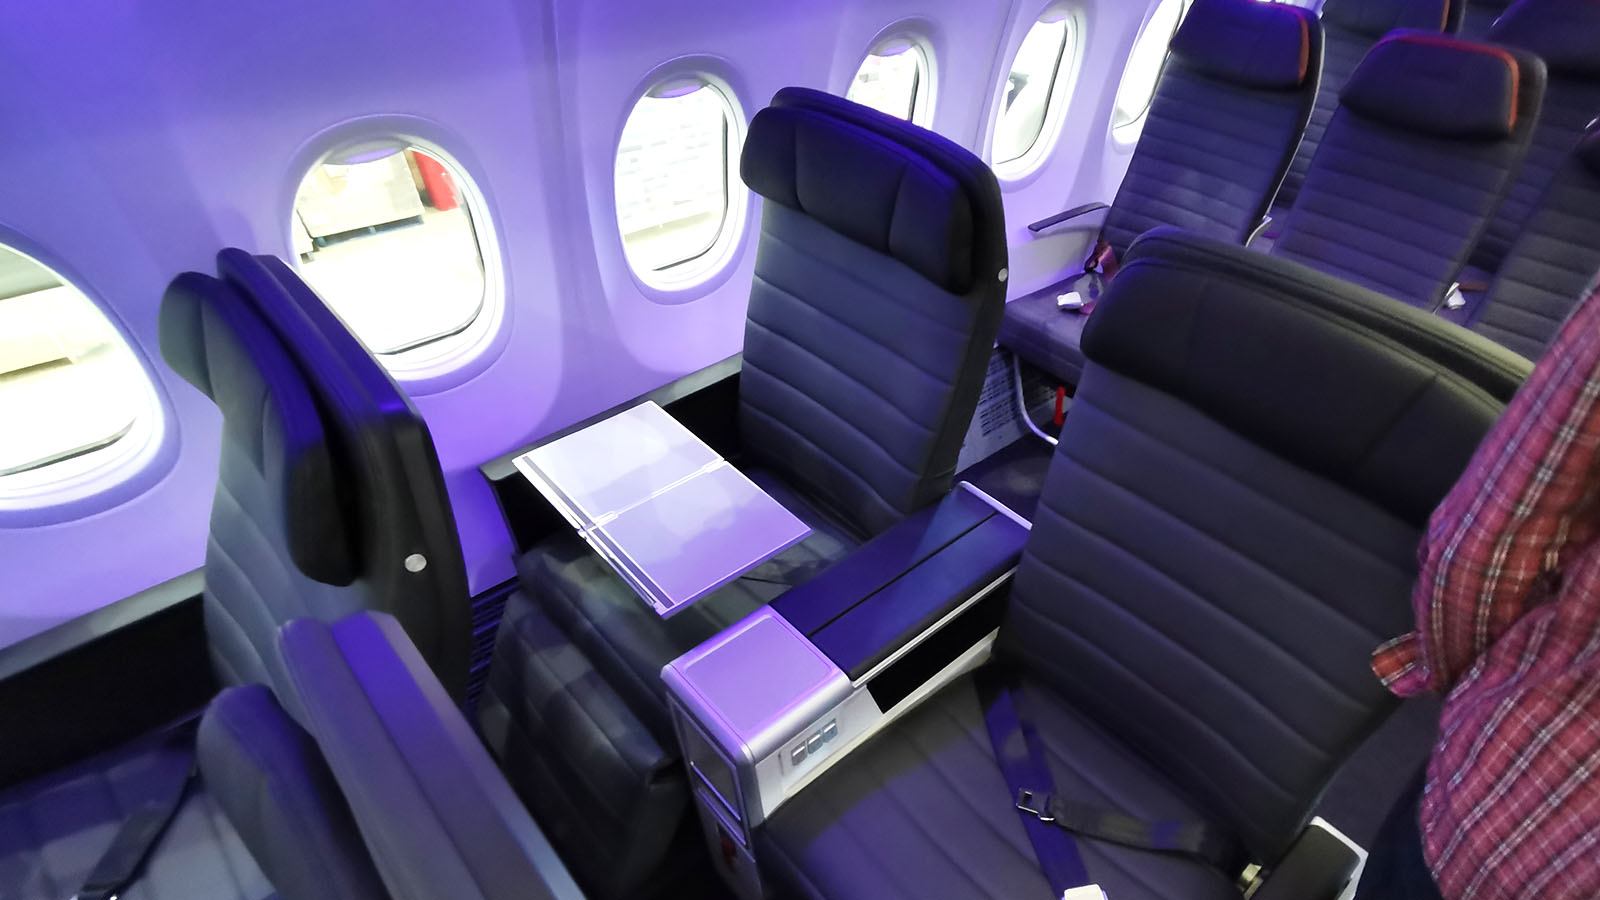 Virgin Australia Boeing 737 MAX 8 Business Class seats